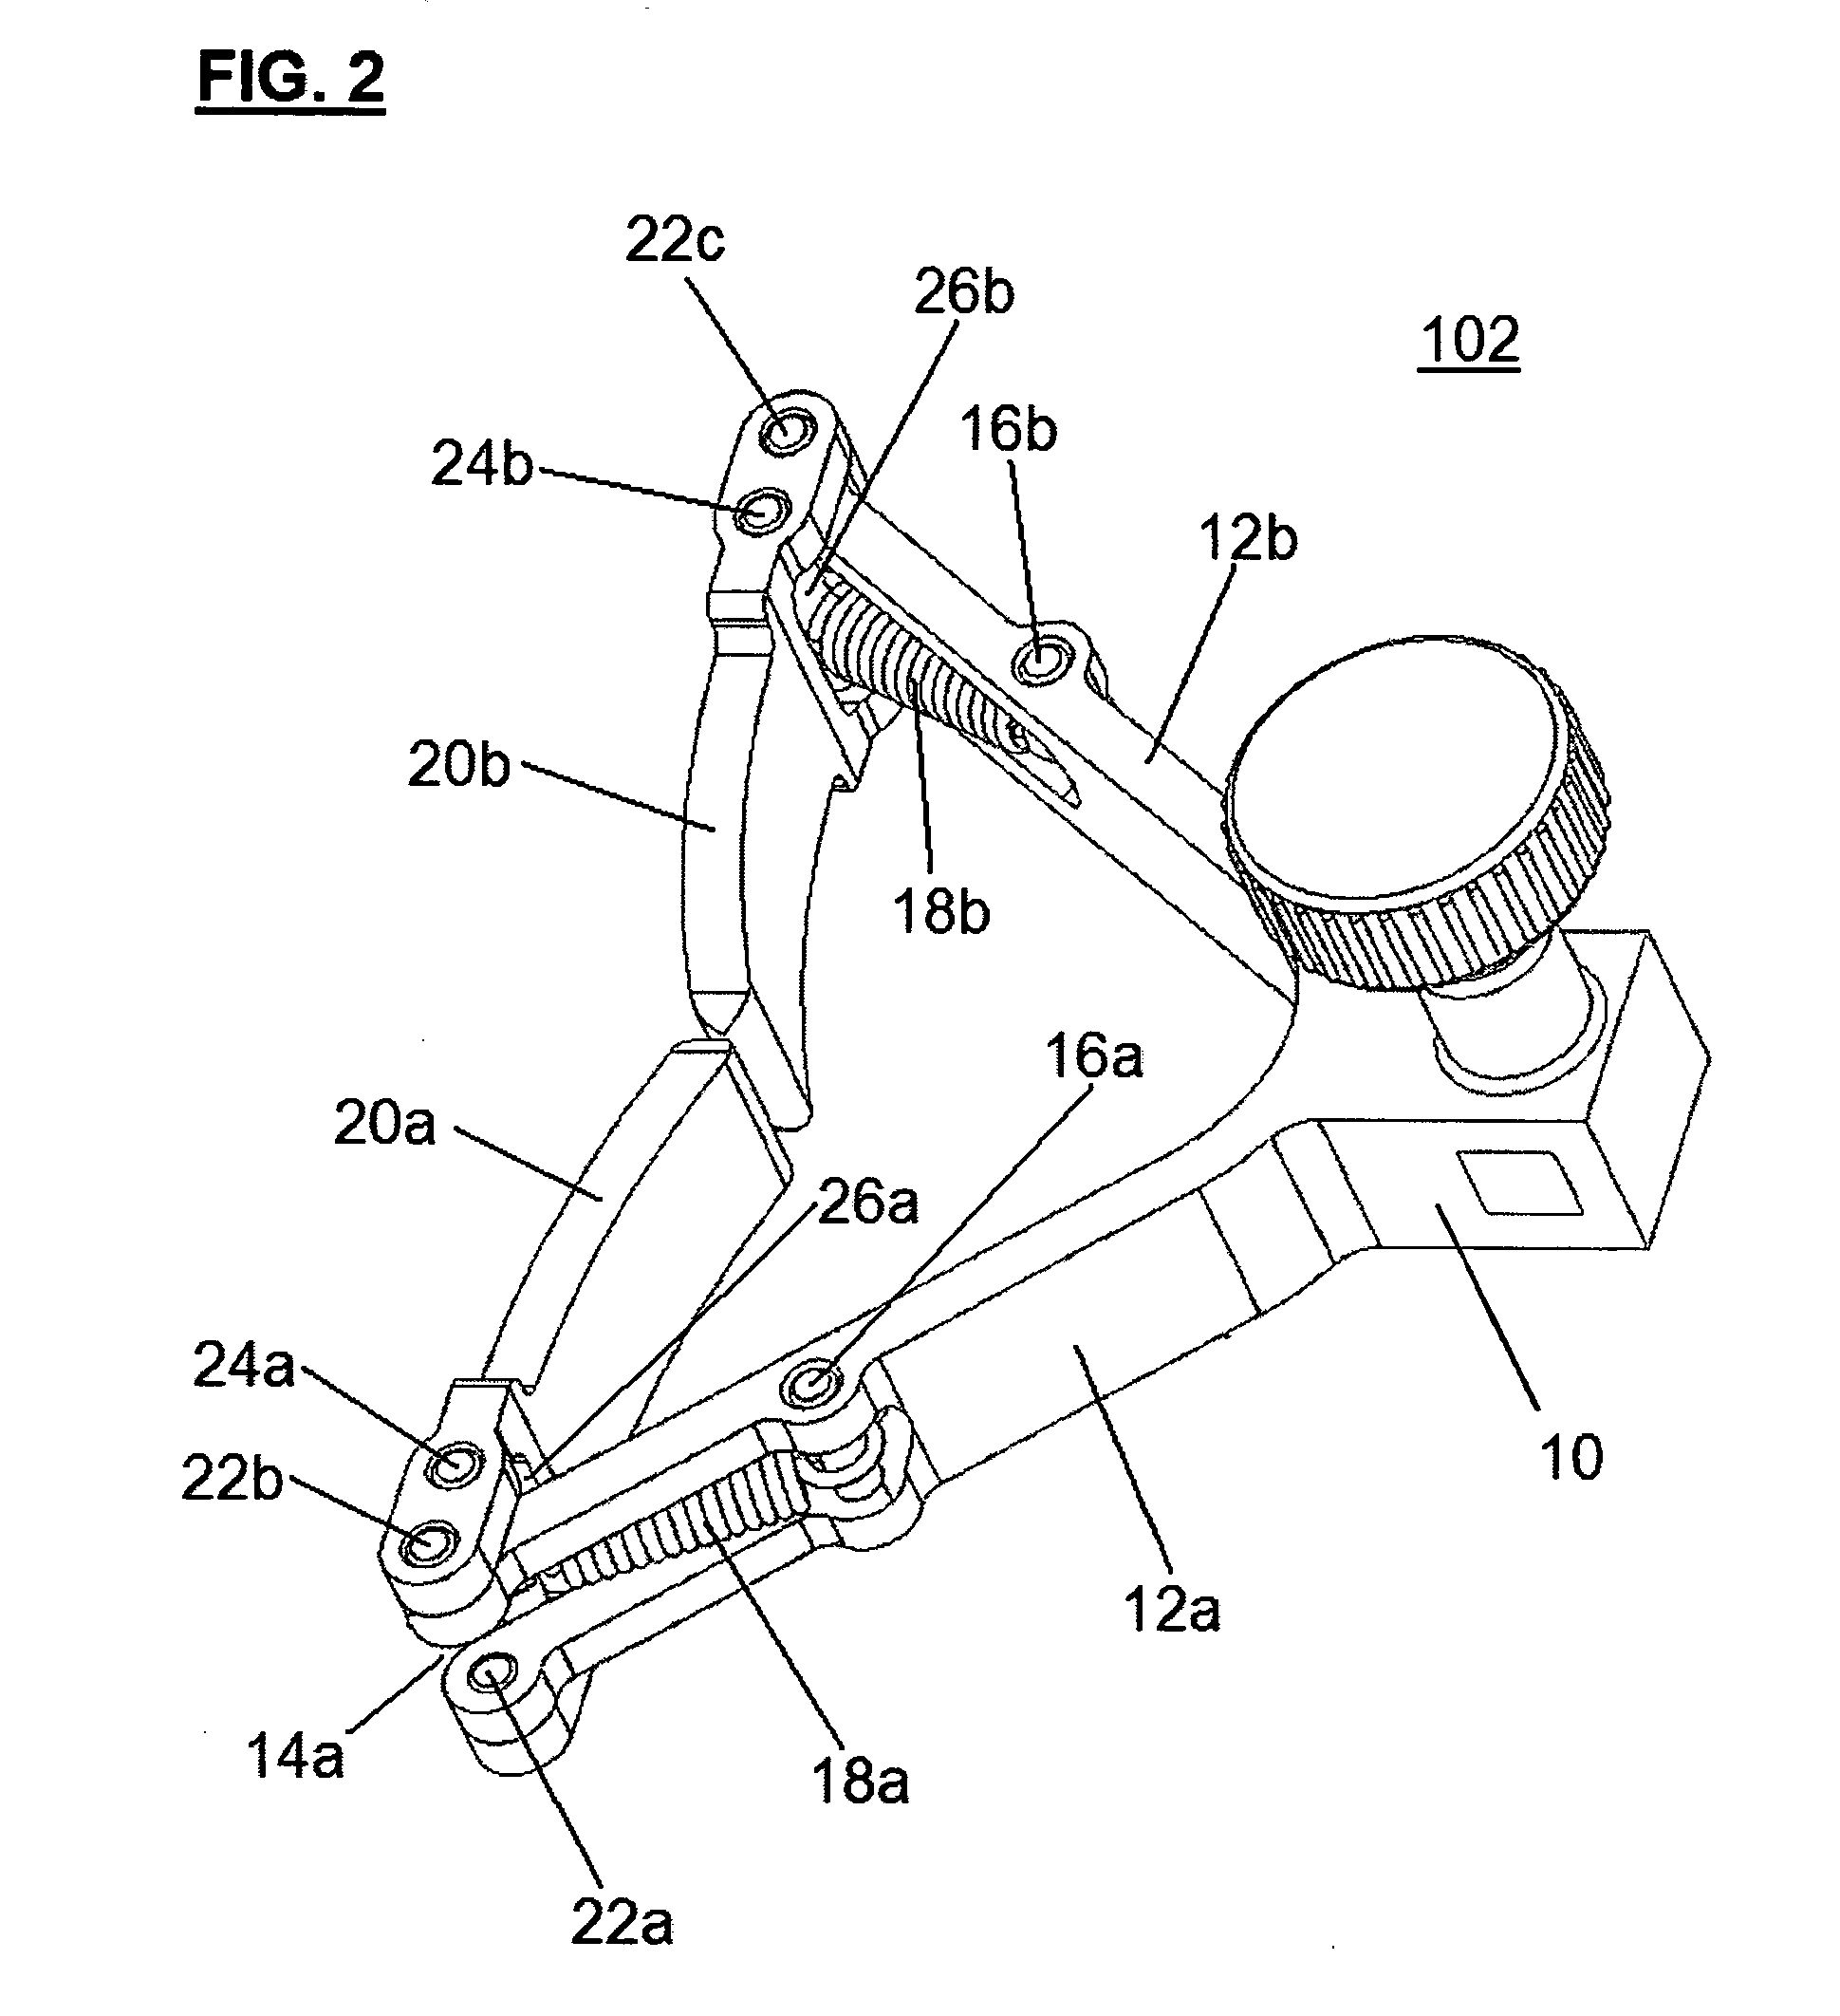 Unicondylar knee instrument system